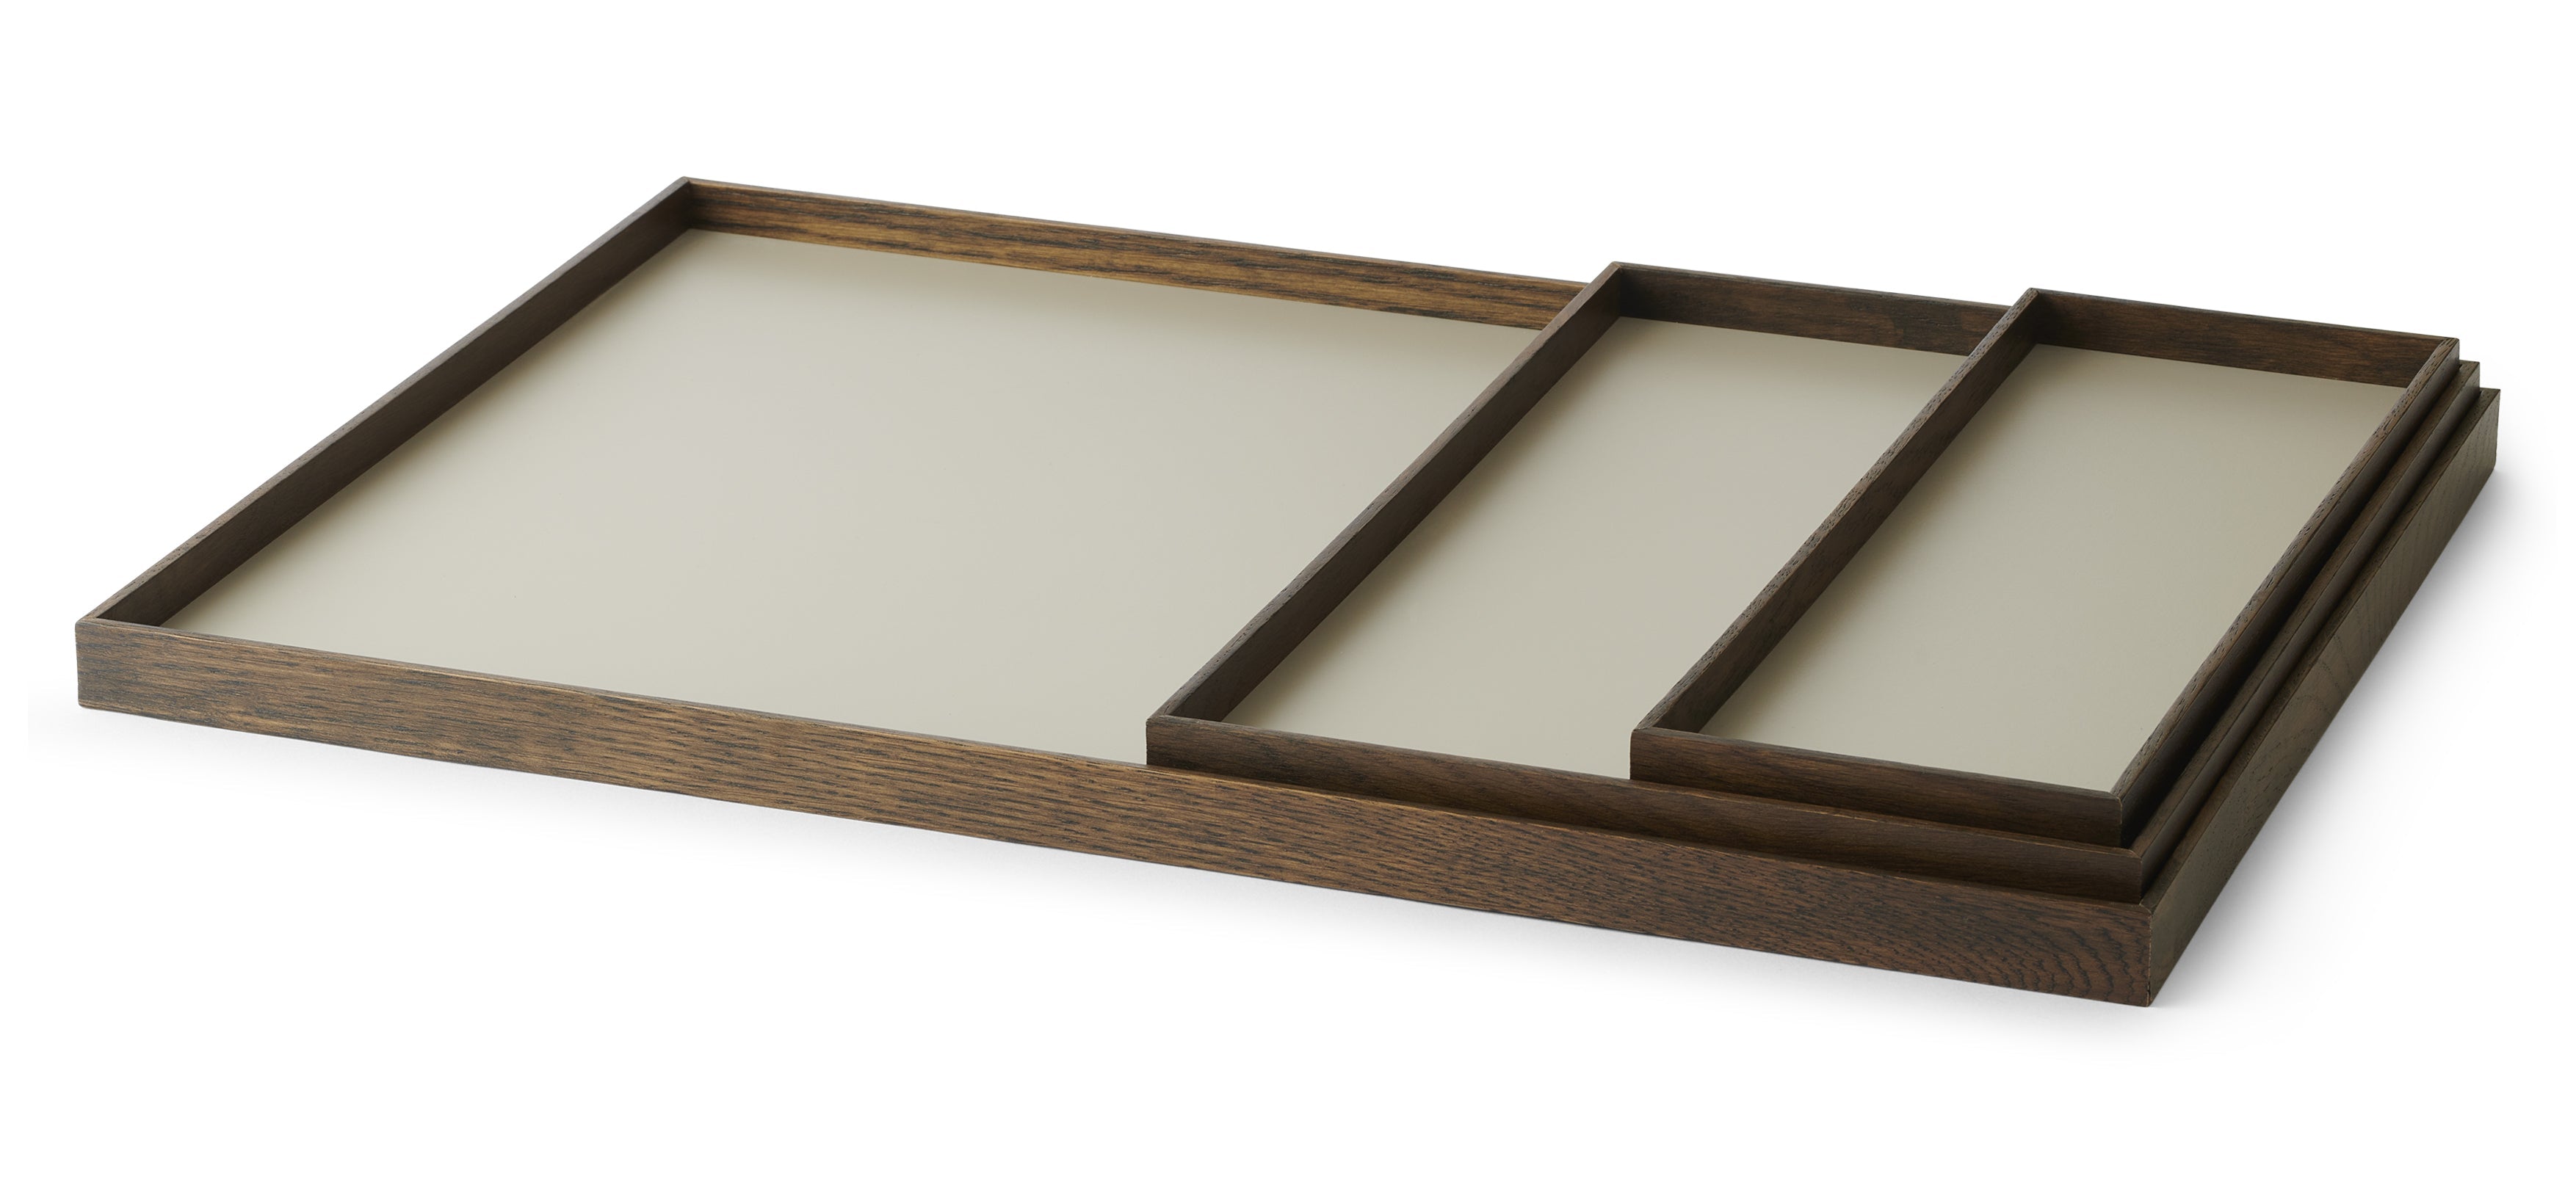 Gejst Frame Tray Smoked Oak/Gray, Medium